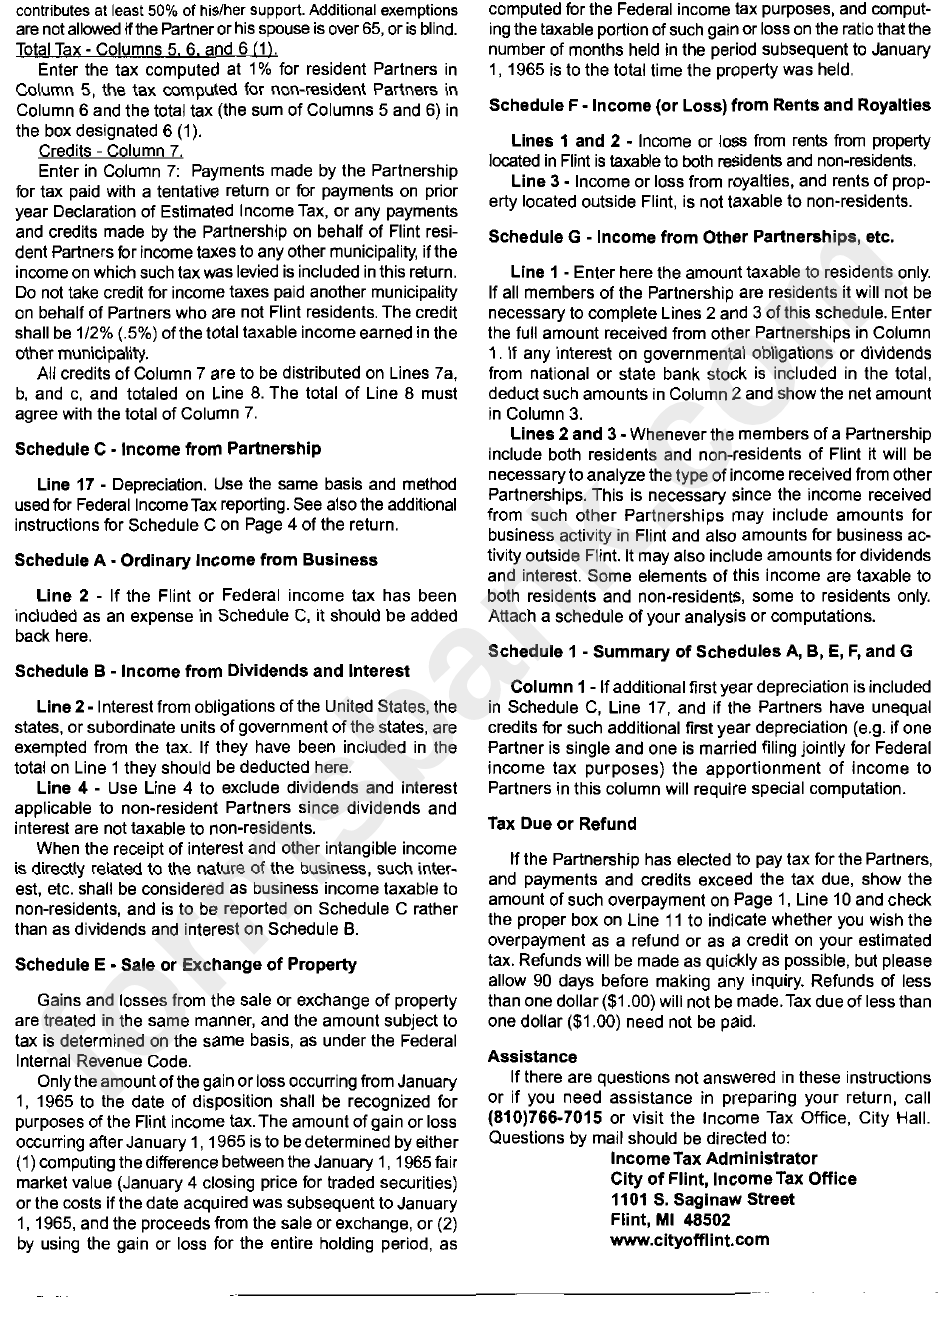 Instructions For Form F1065 - Partnership Return - 2006